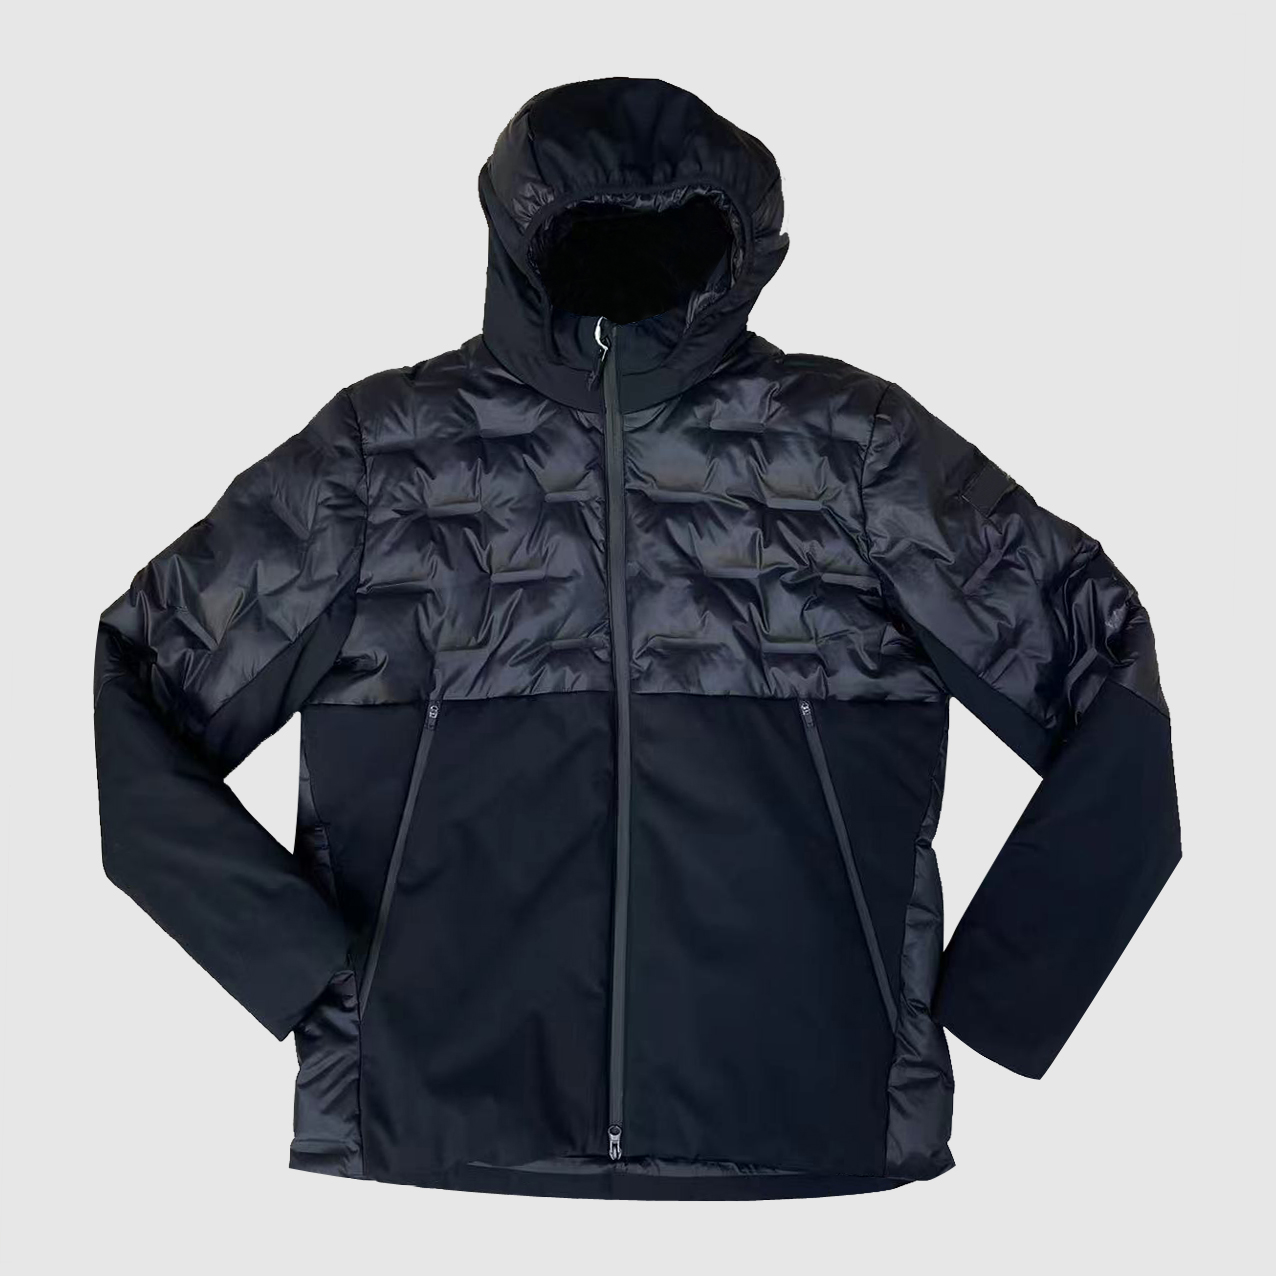 Men’s hybrid jacket Featured Image